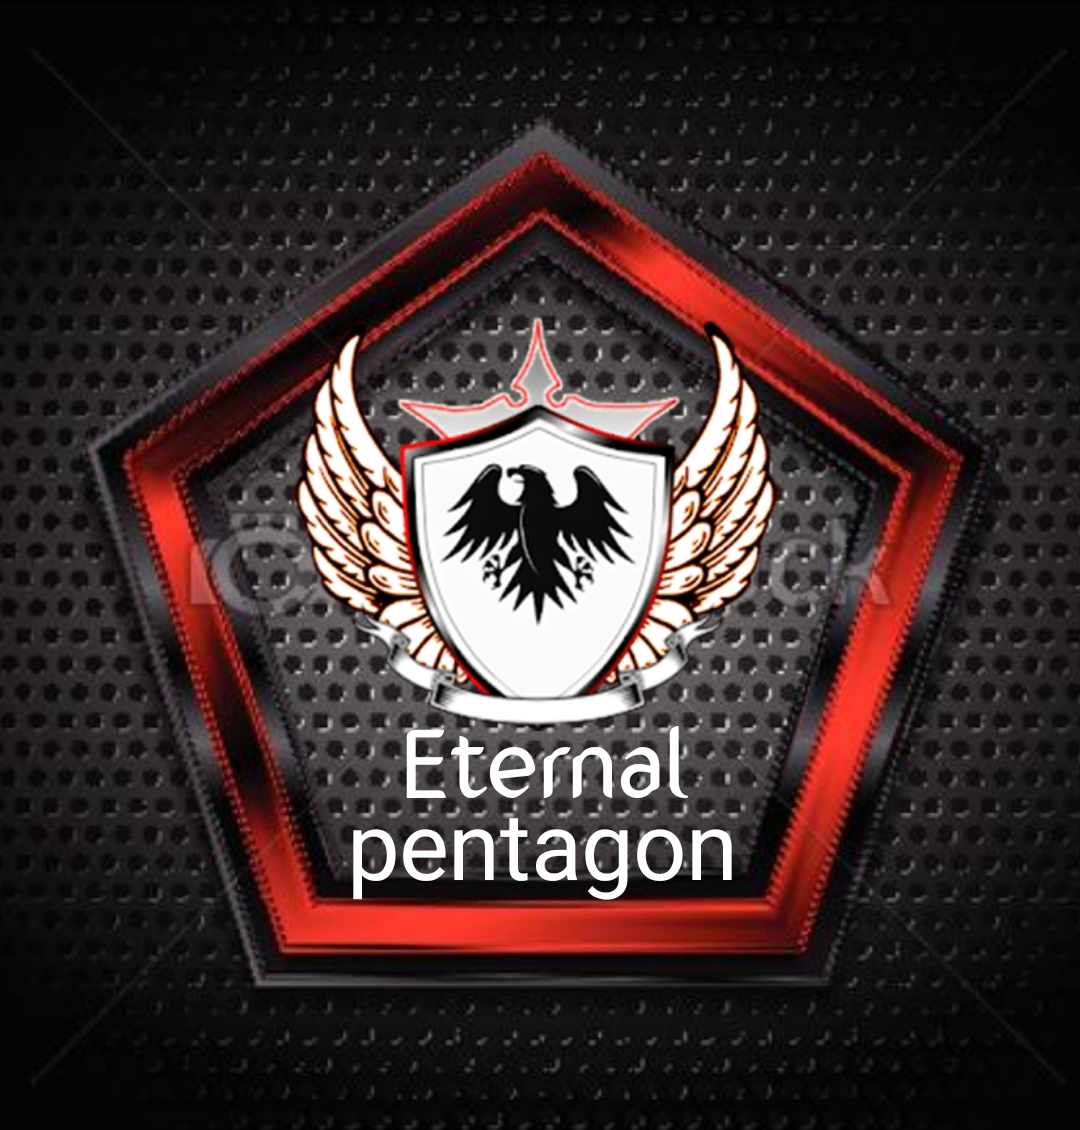 Eternal pentagon